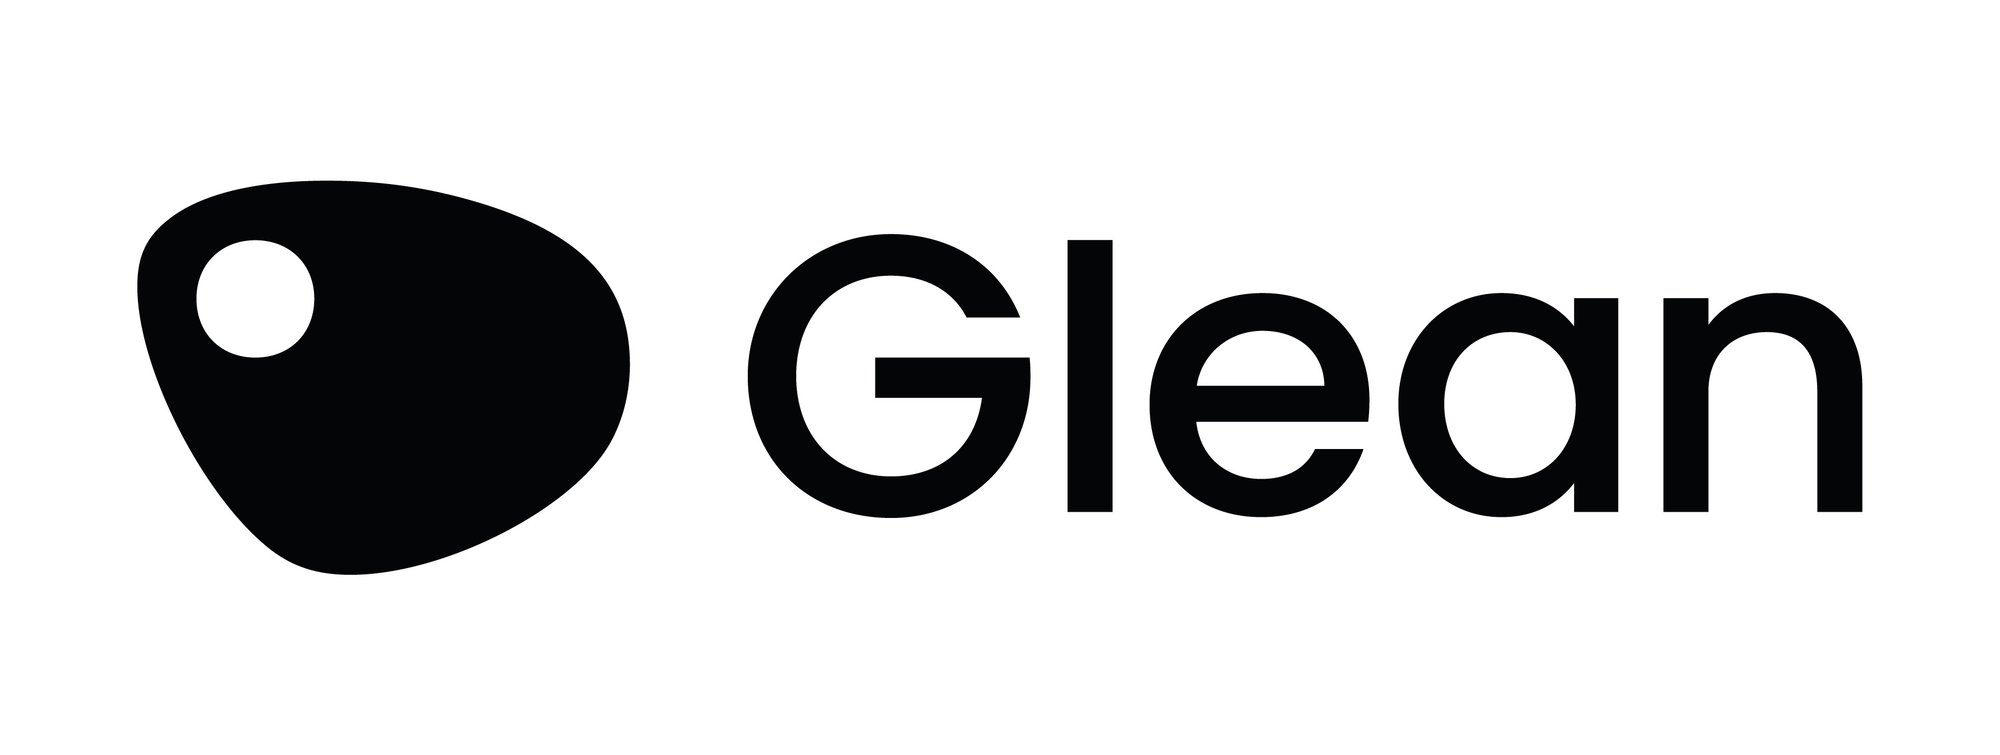 Glean logo 